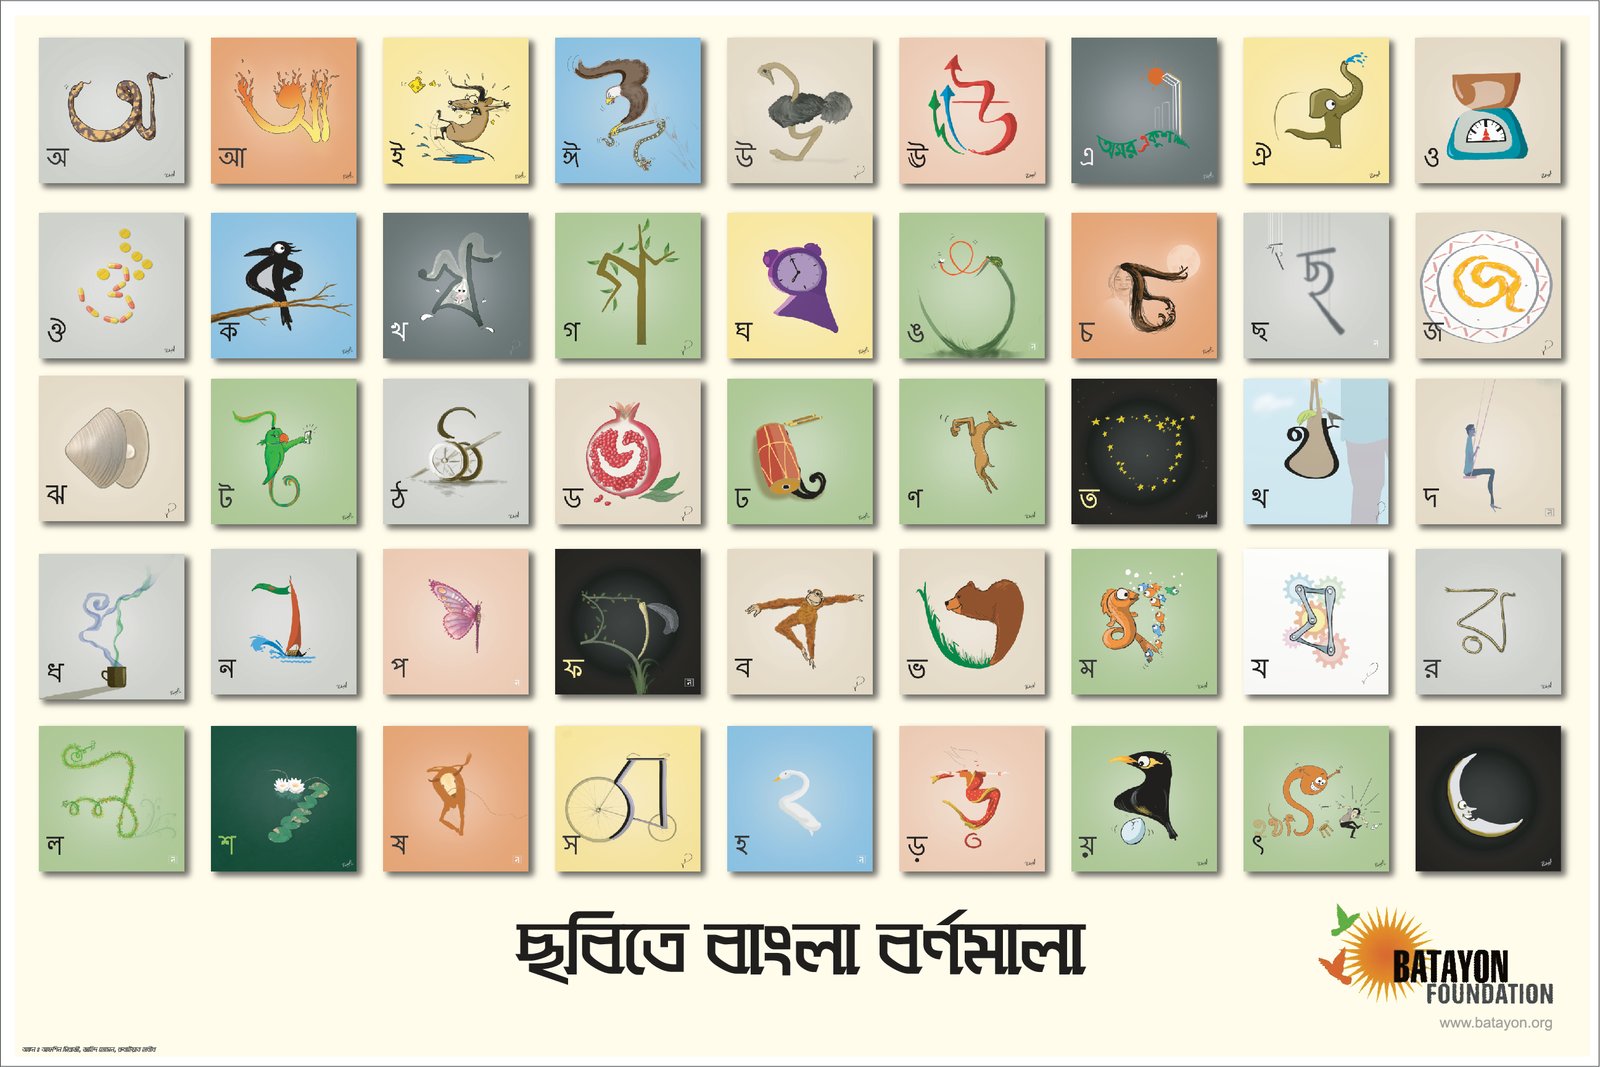 bangla alphabet with english pronunciation